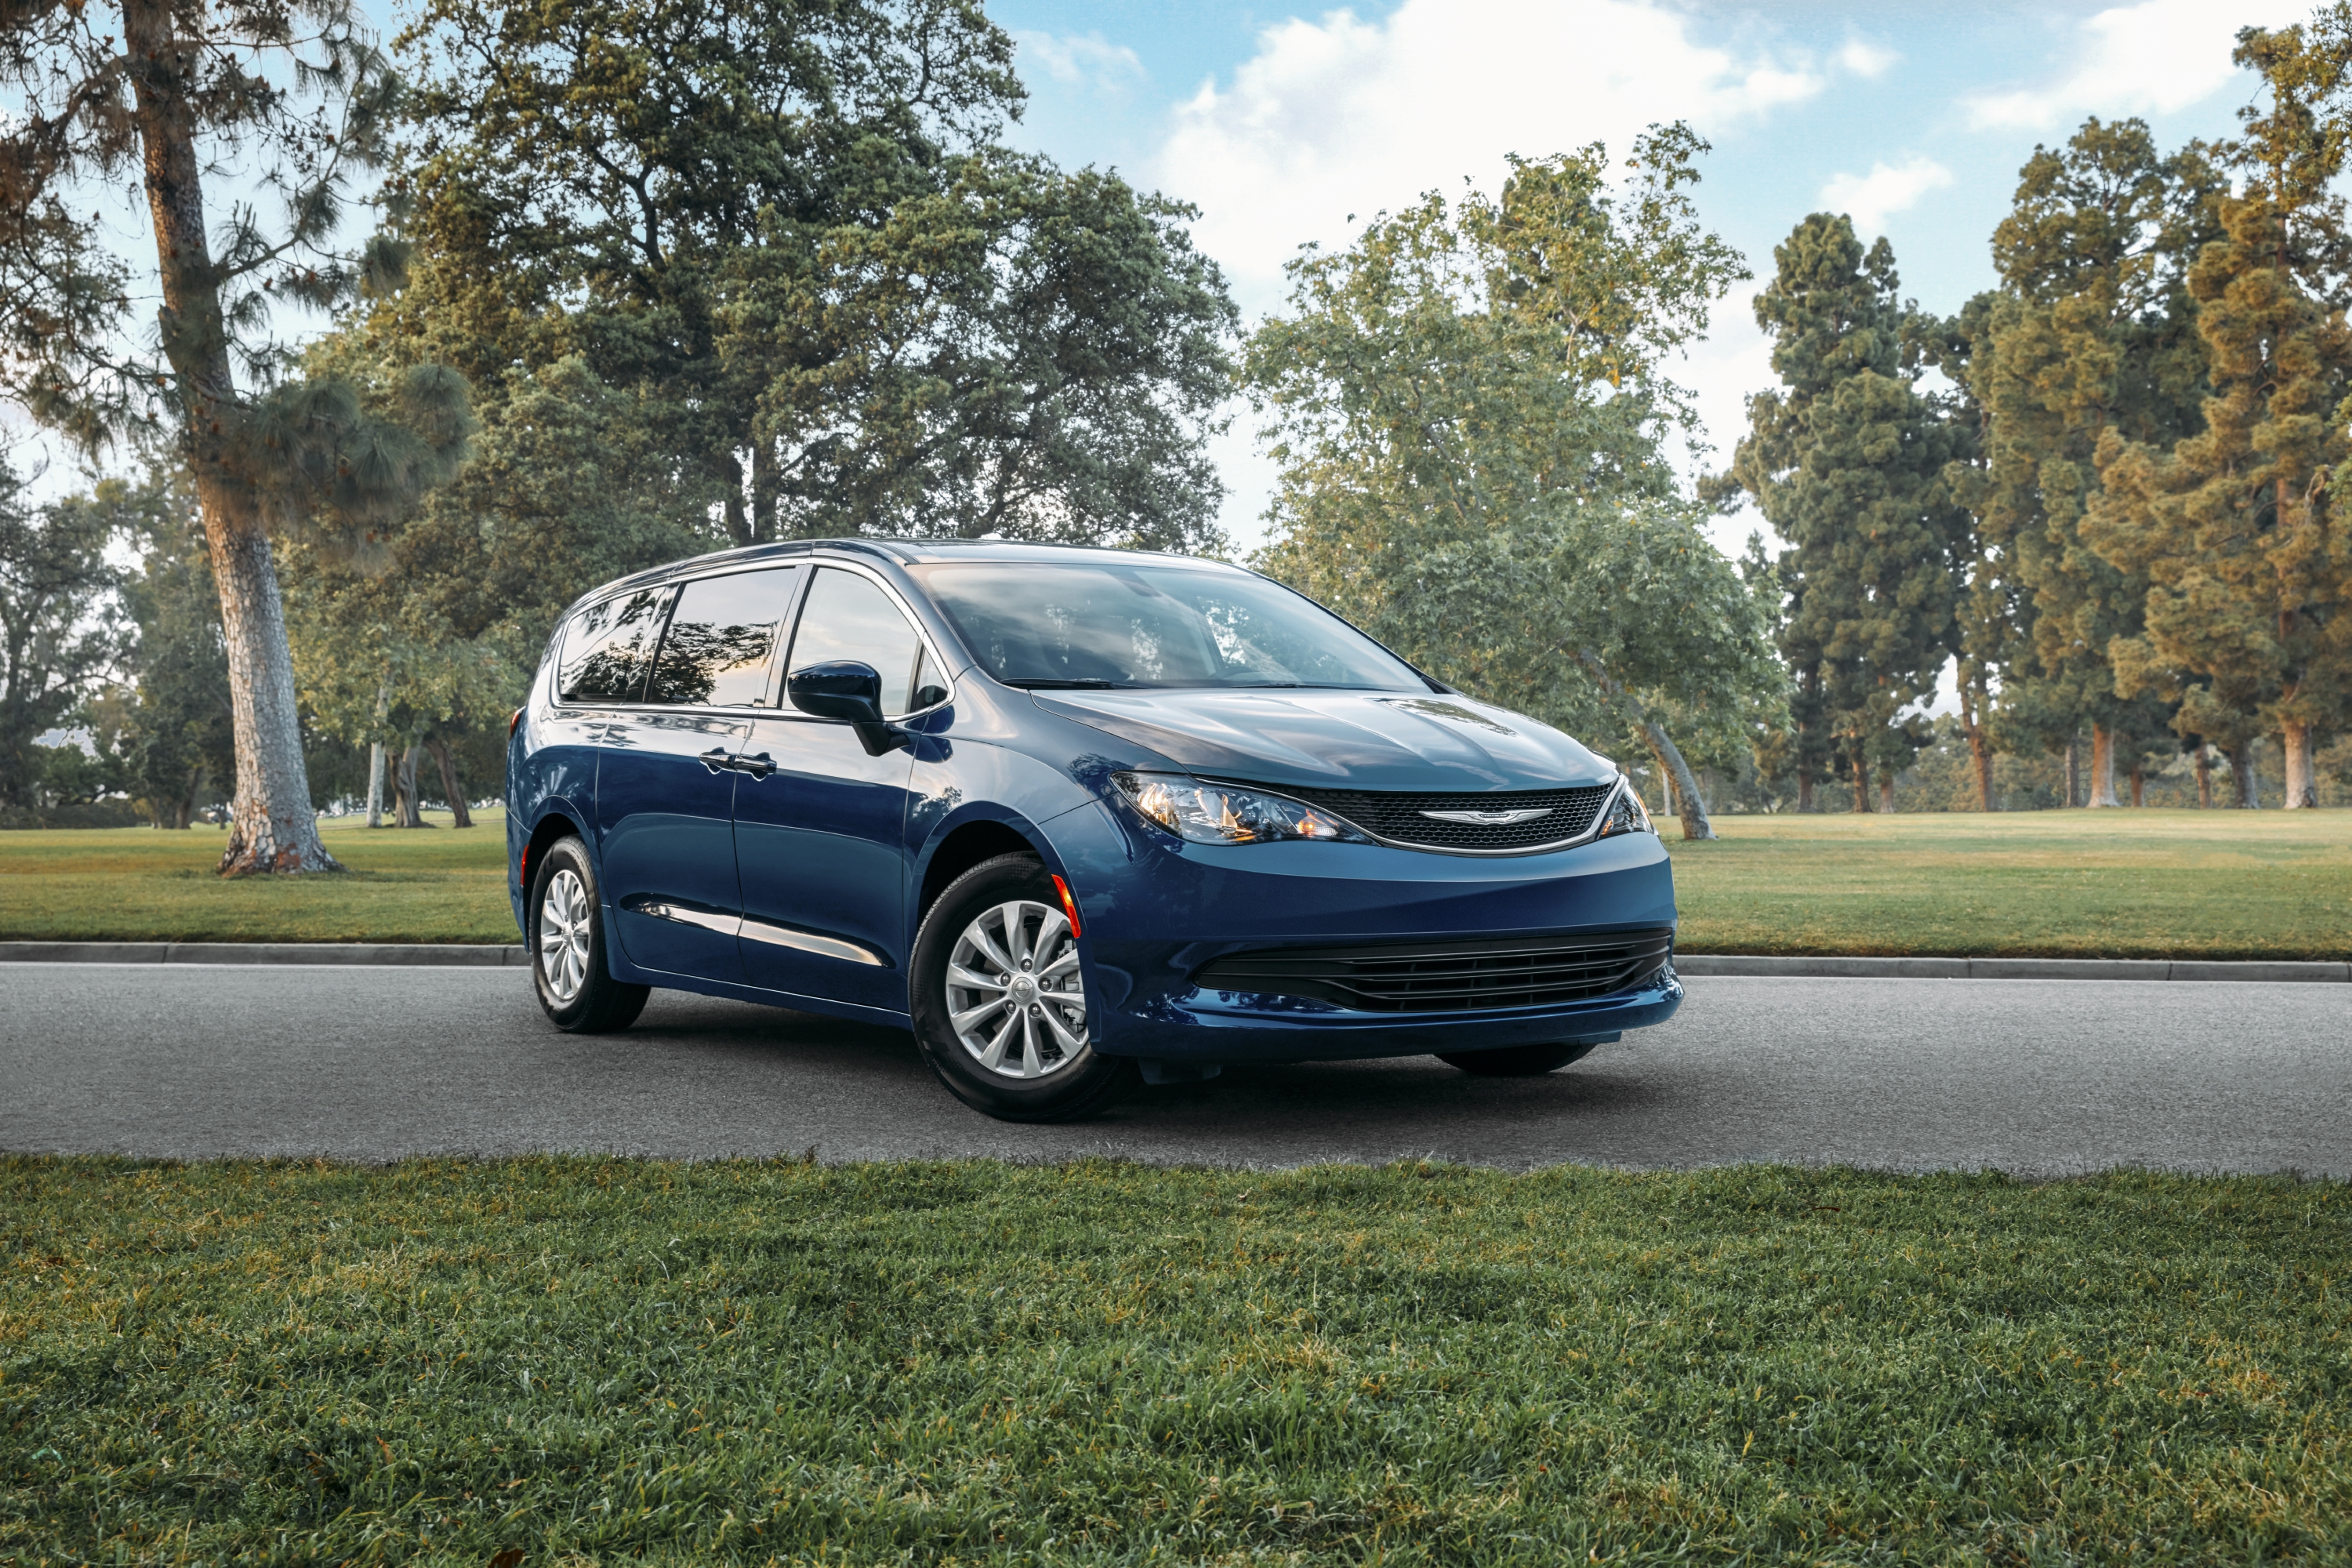 Chrysler Launches Ultra-Safe Voyager Minivan